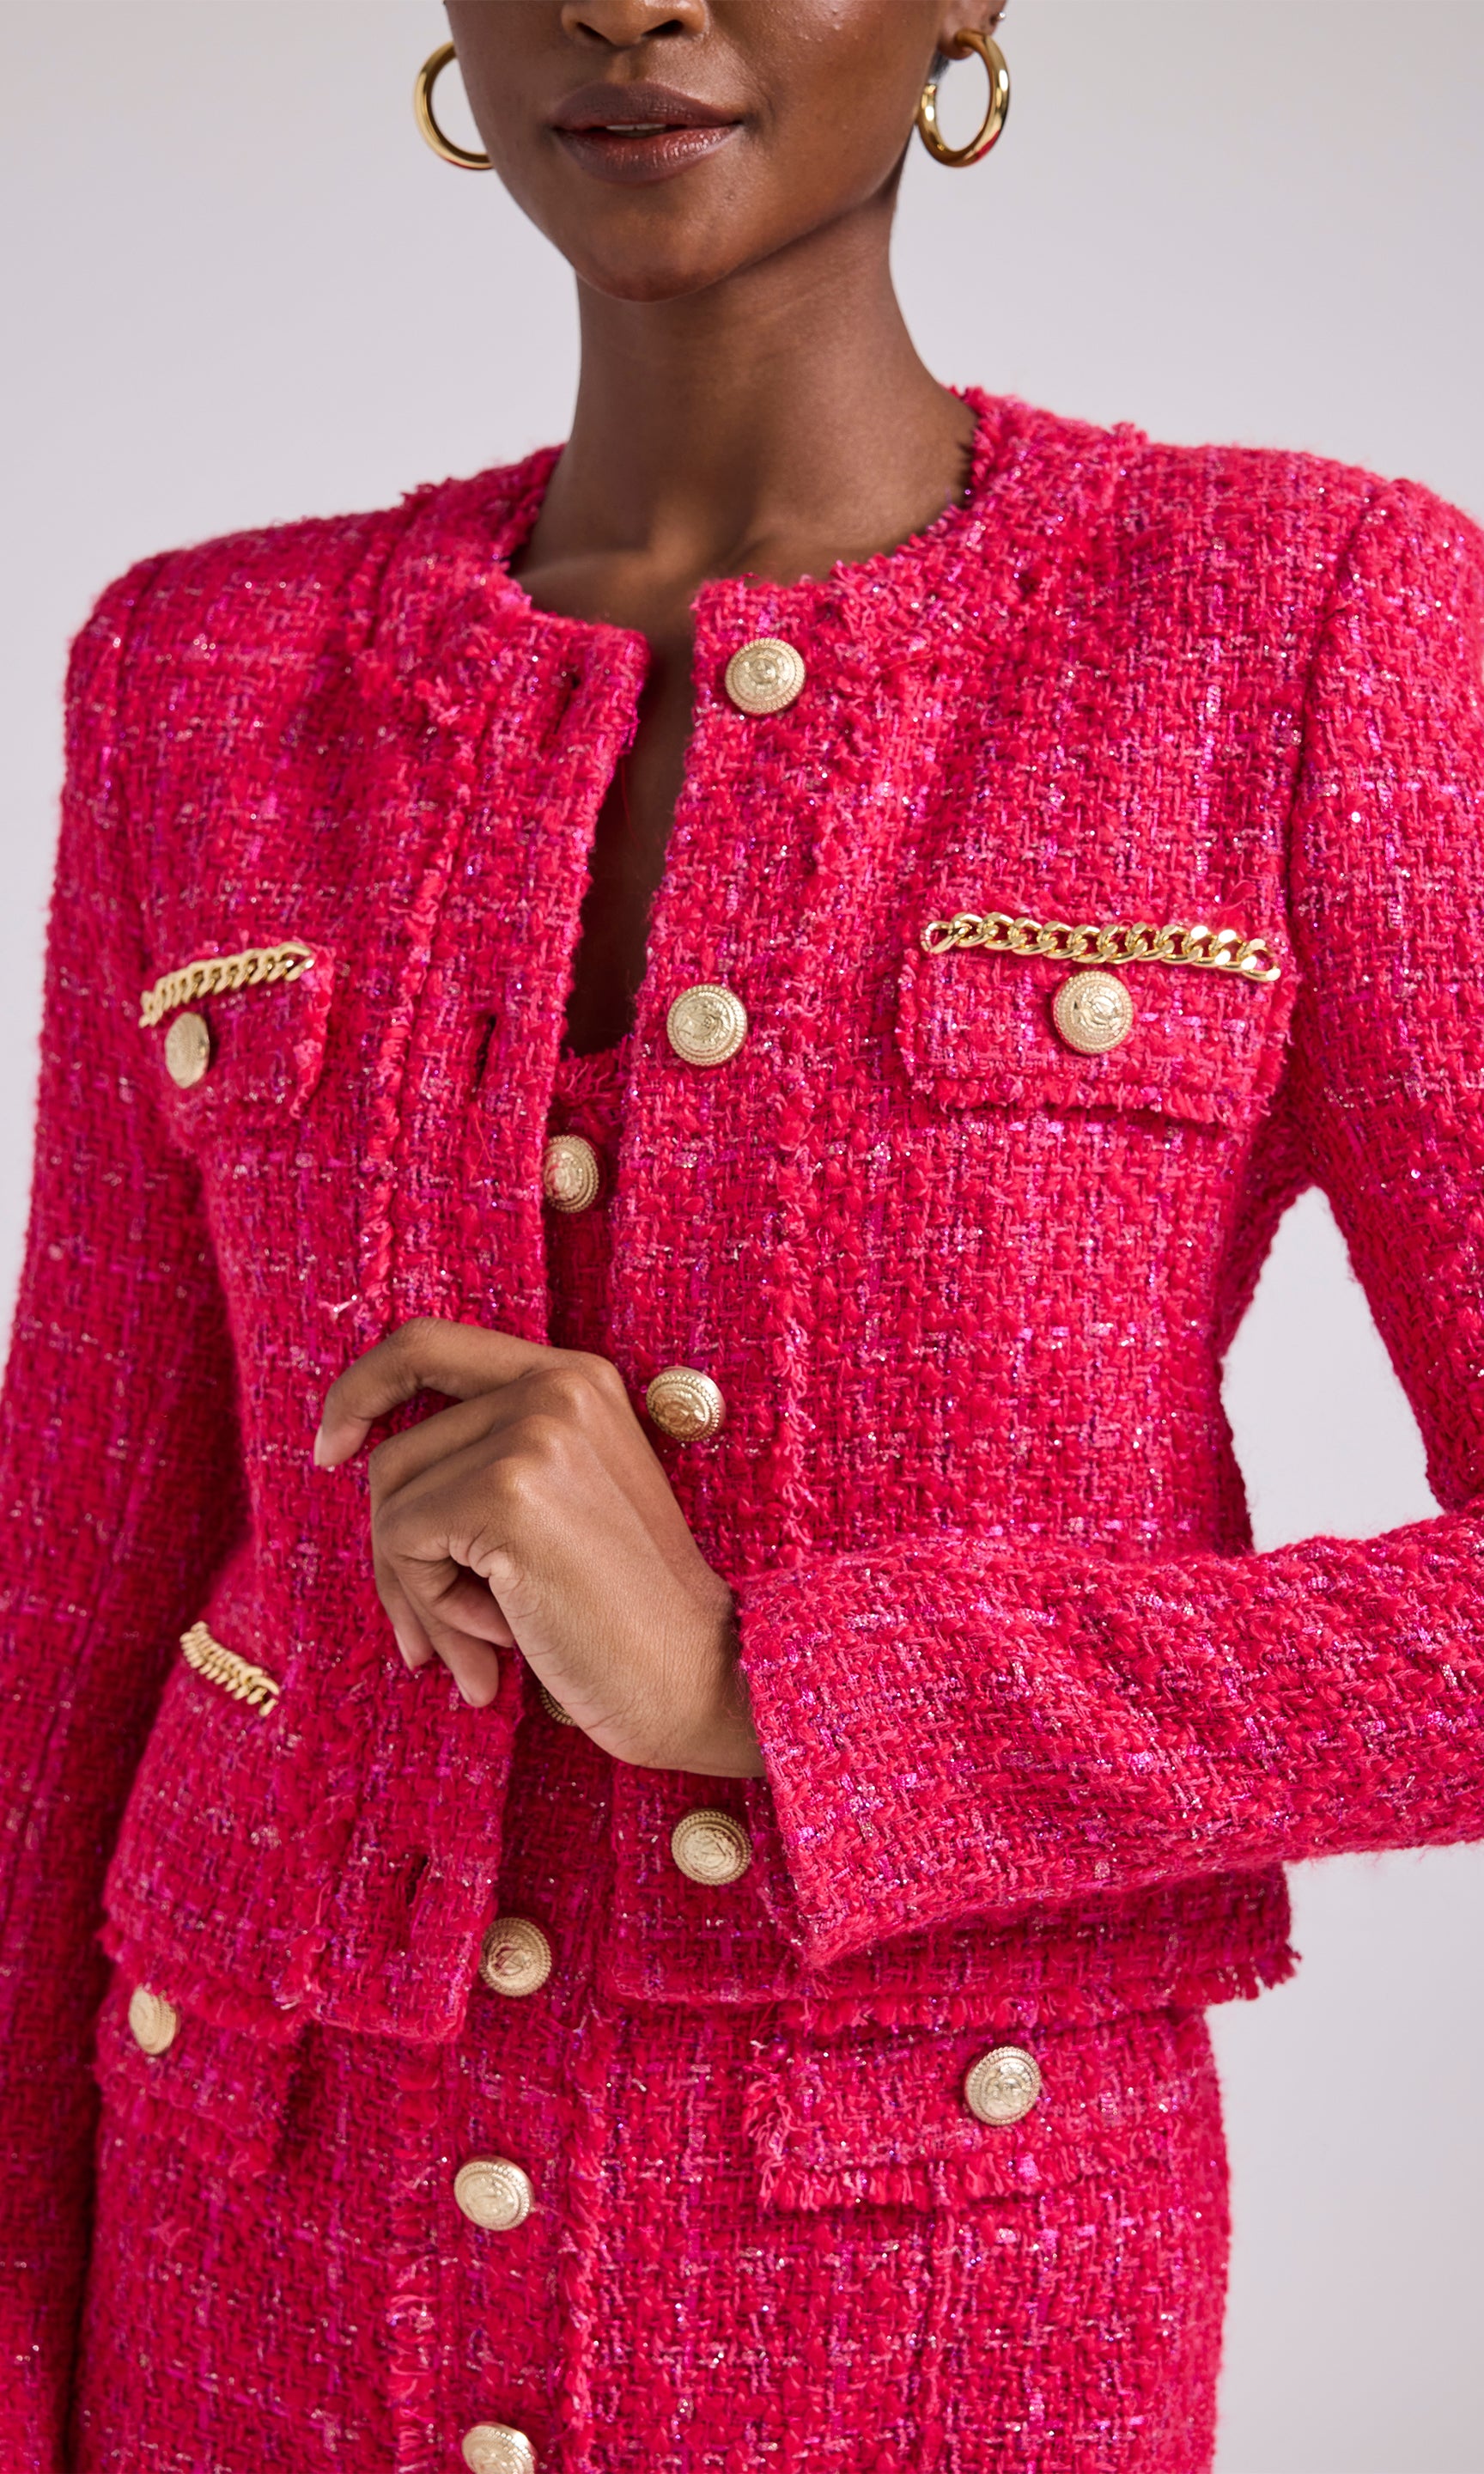 Generation Love Viv Tweed Jacket S / Hot Pink